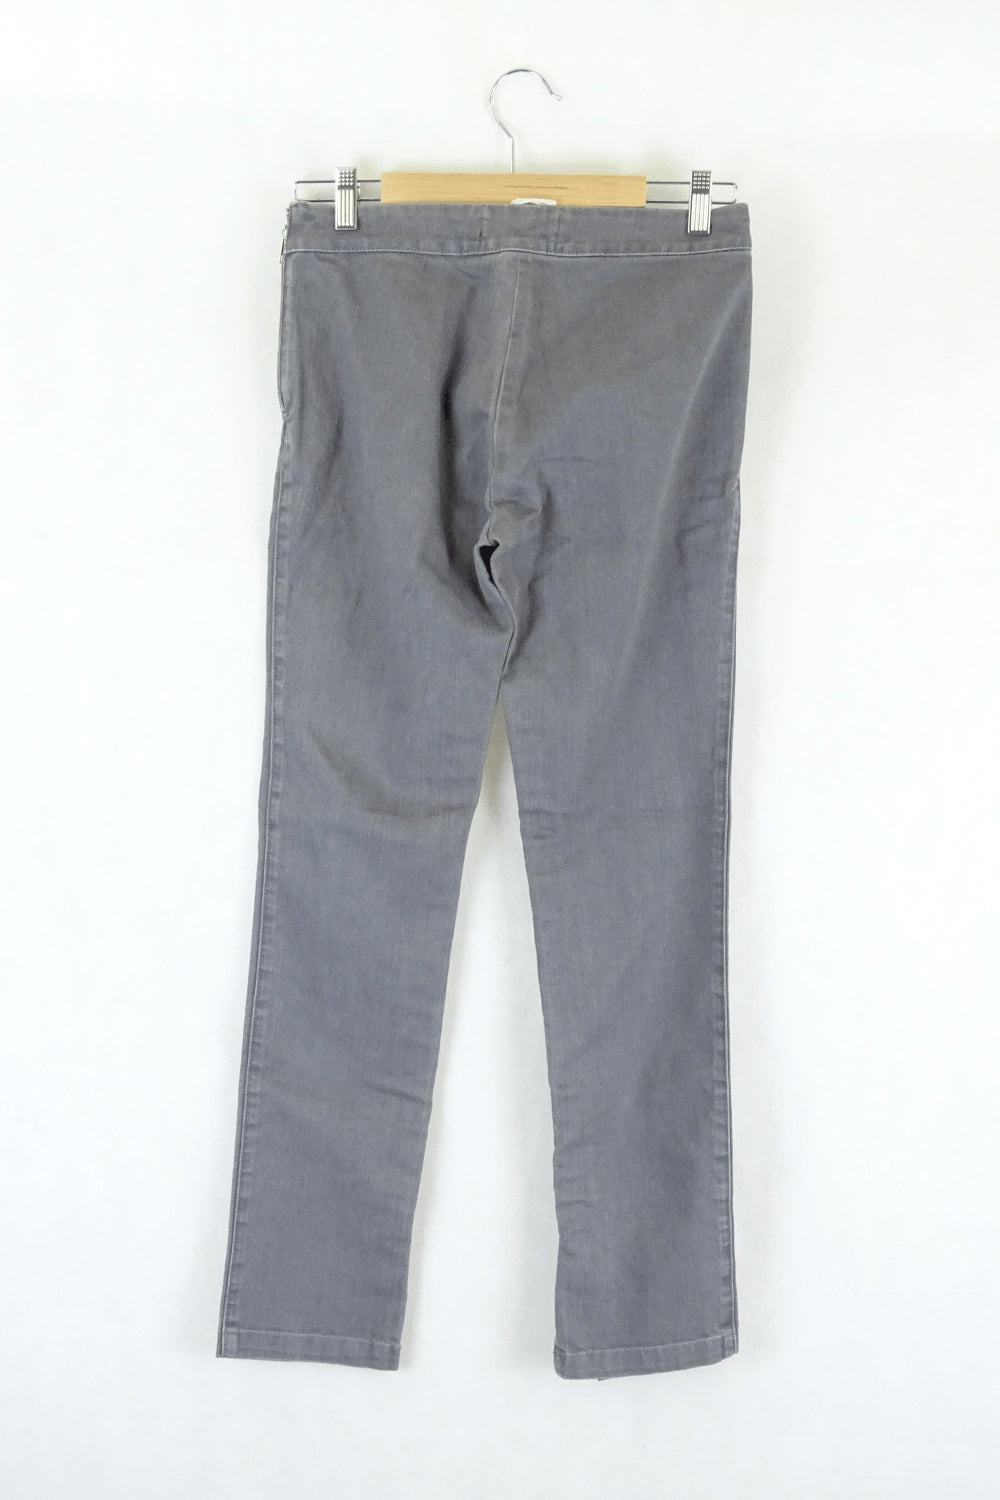 Marline Birger Grey Jeans 28/34 (10AU)